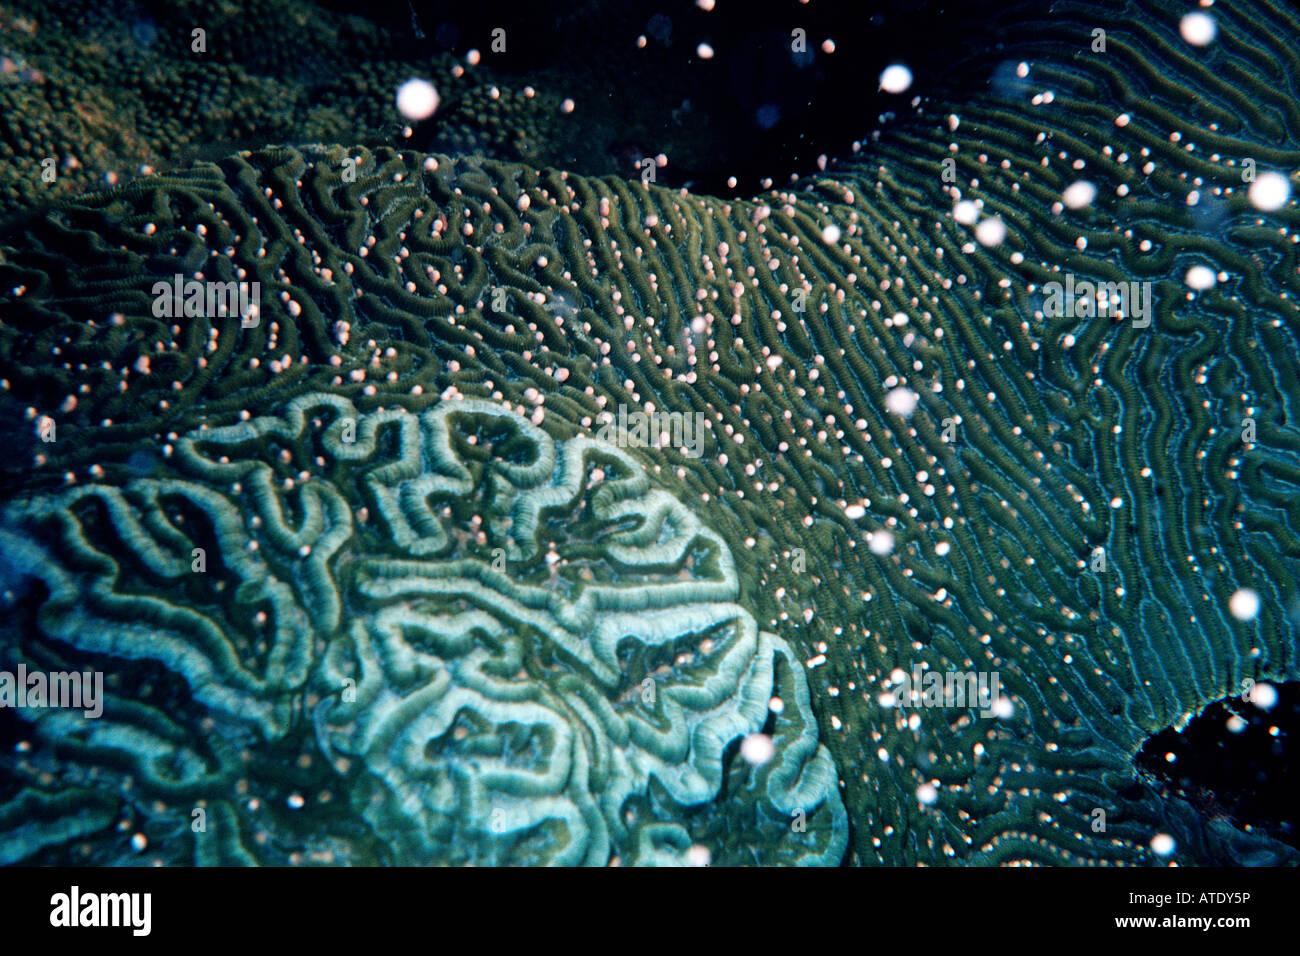 Brain coral Diploria Caraïbes Océan atlantique fraye sp Banque D'Images